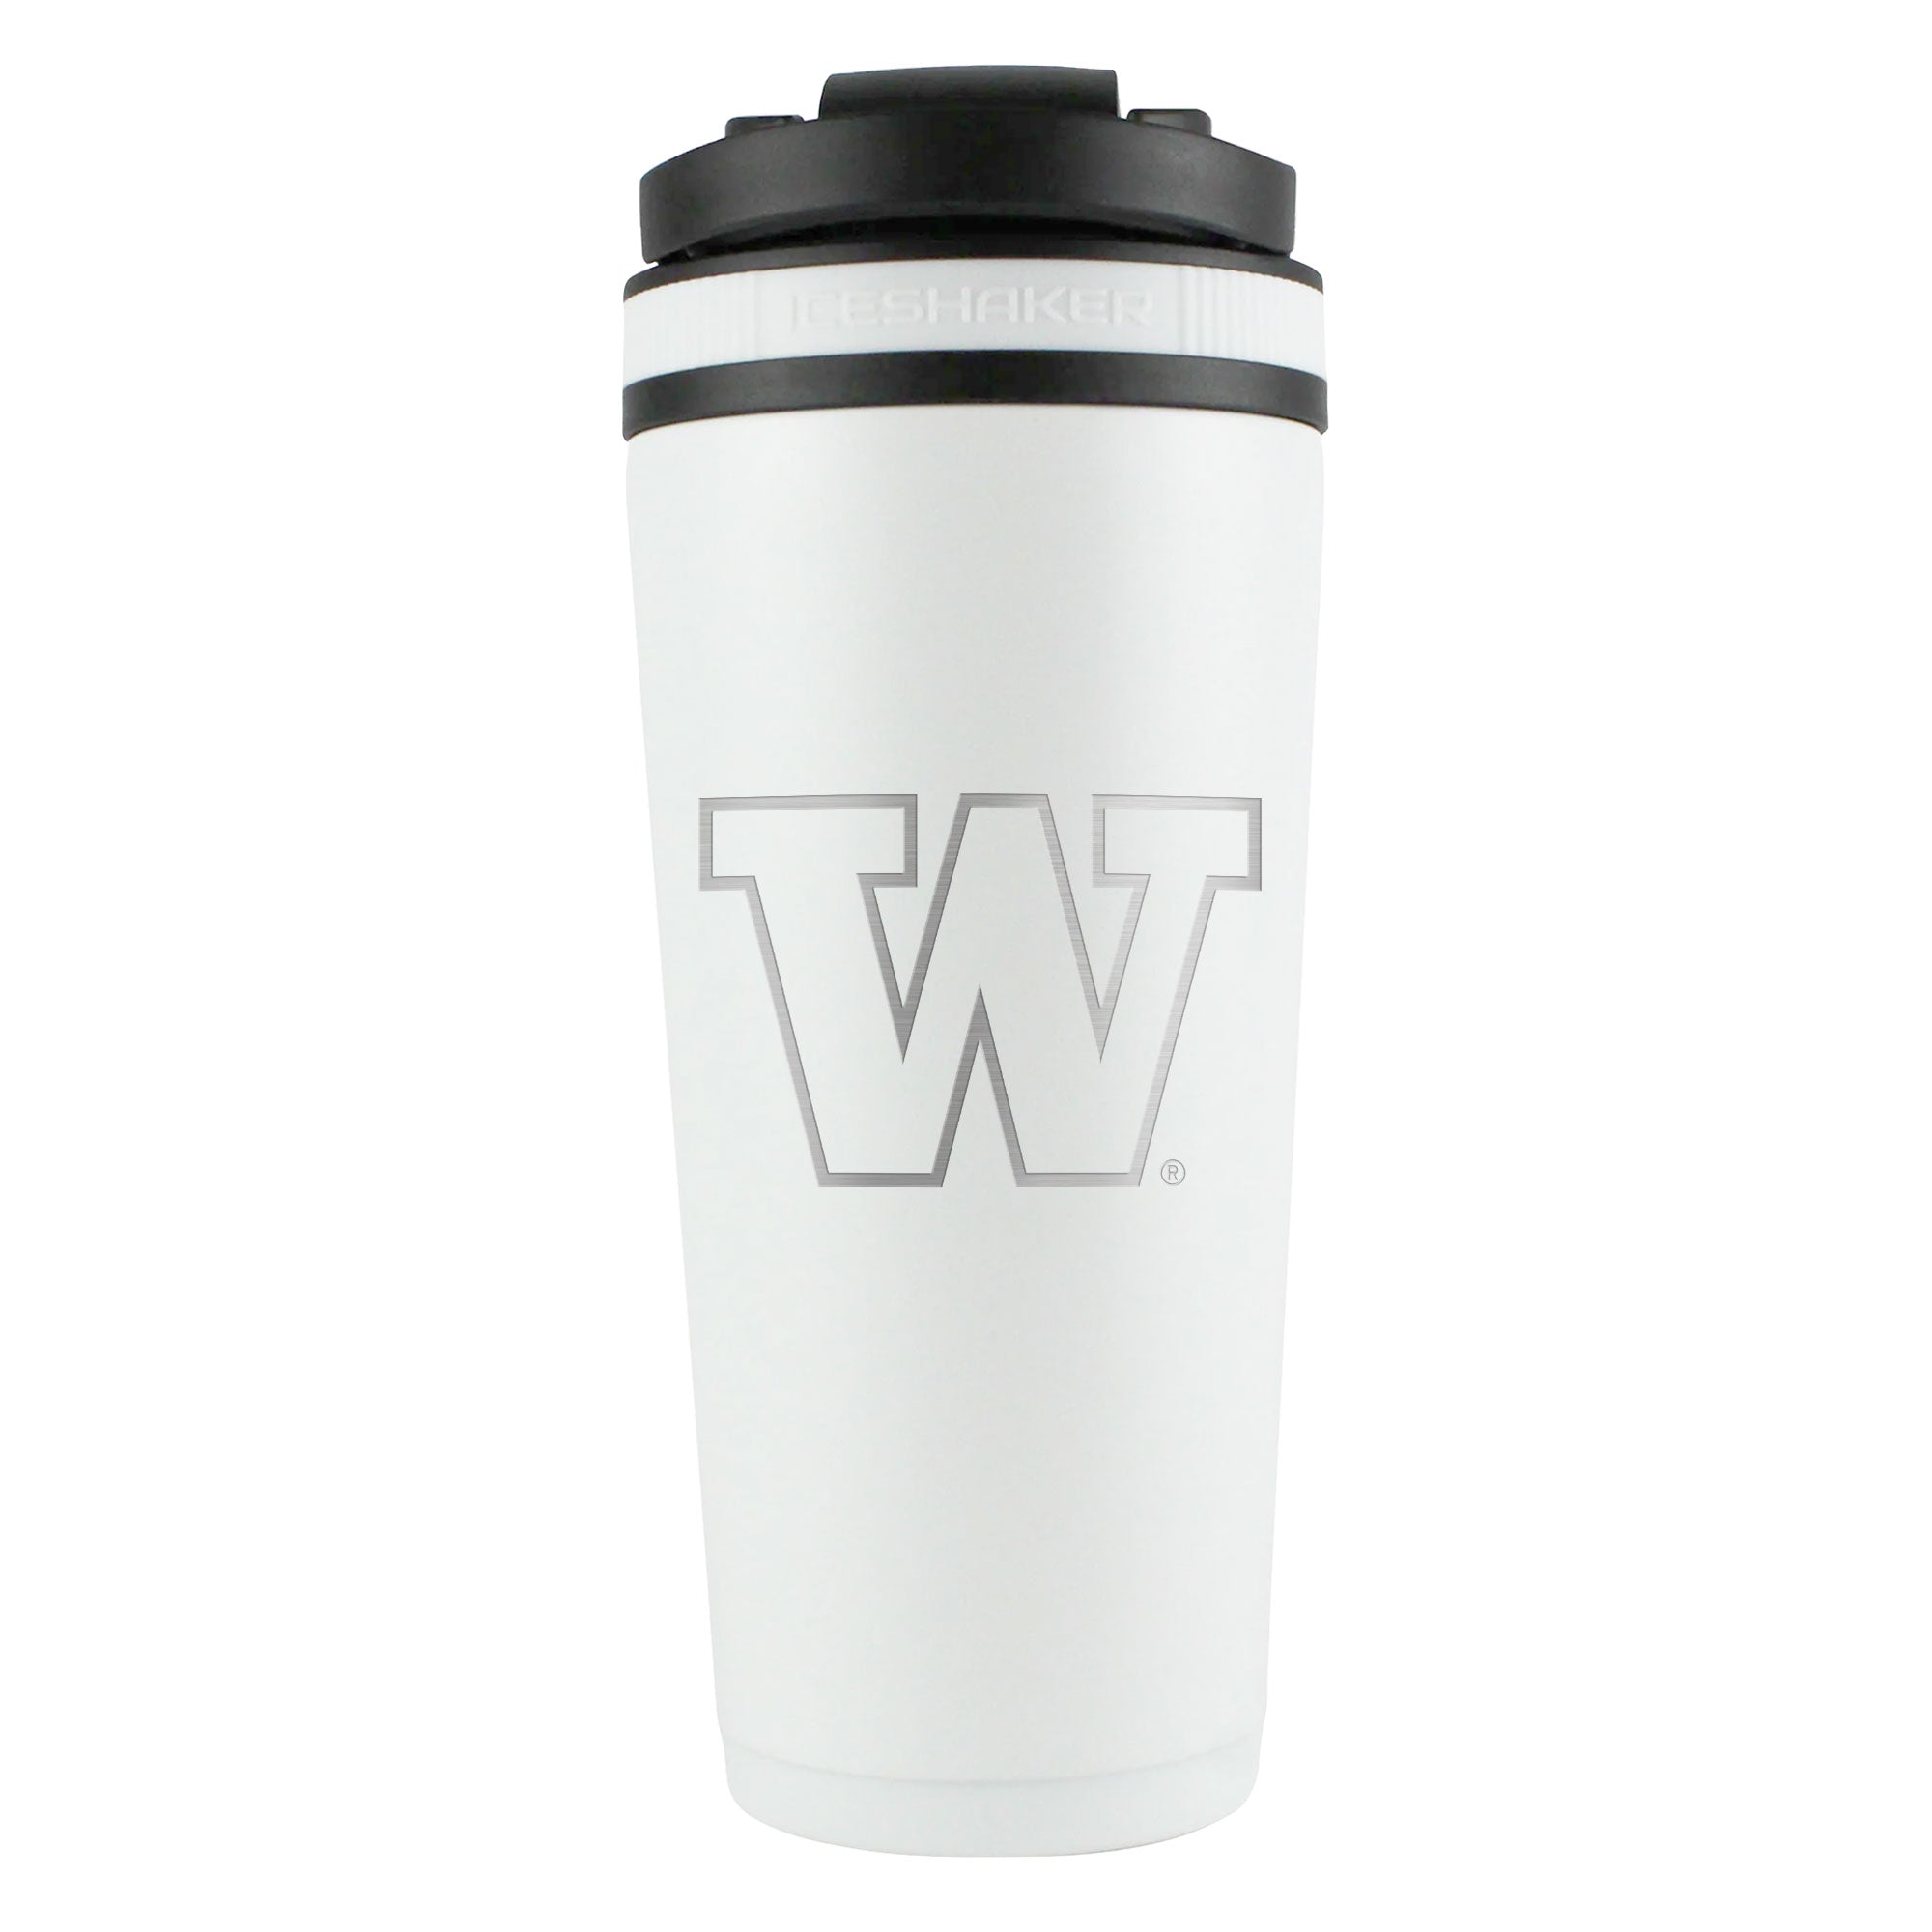 Officially Licensed University of Washington 26oz Ice Shaker - White